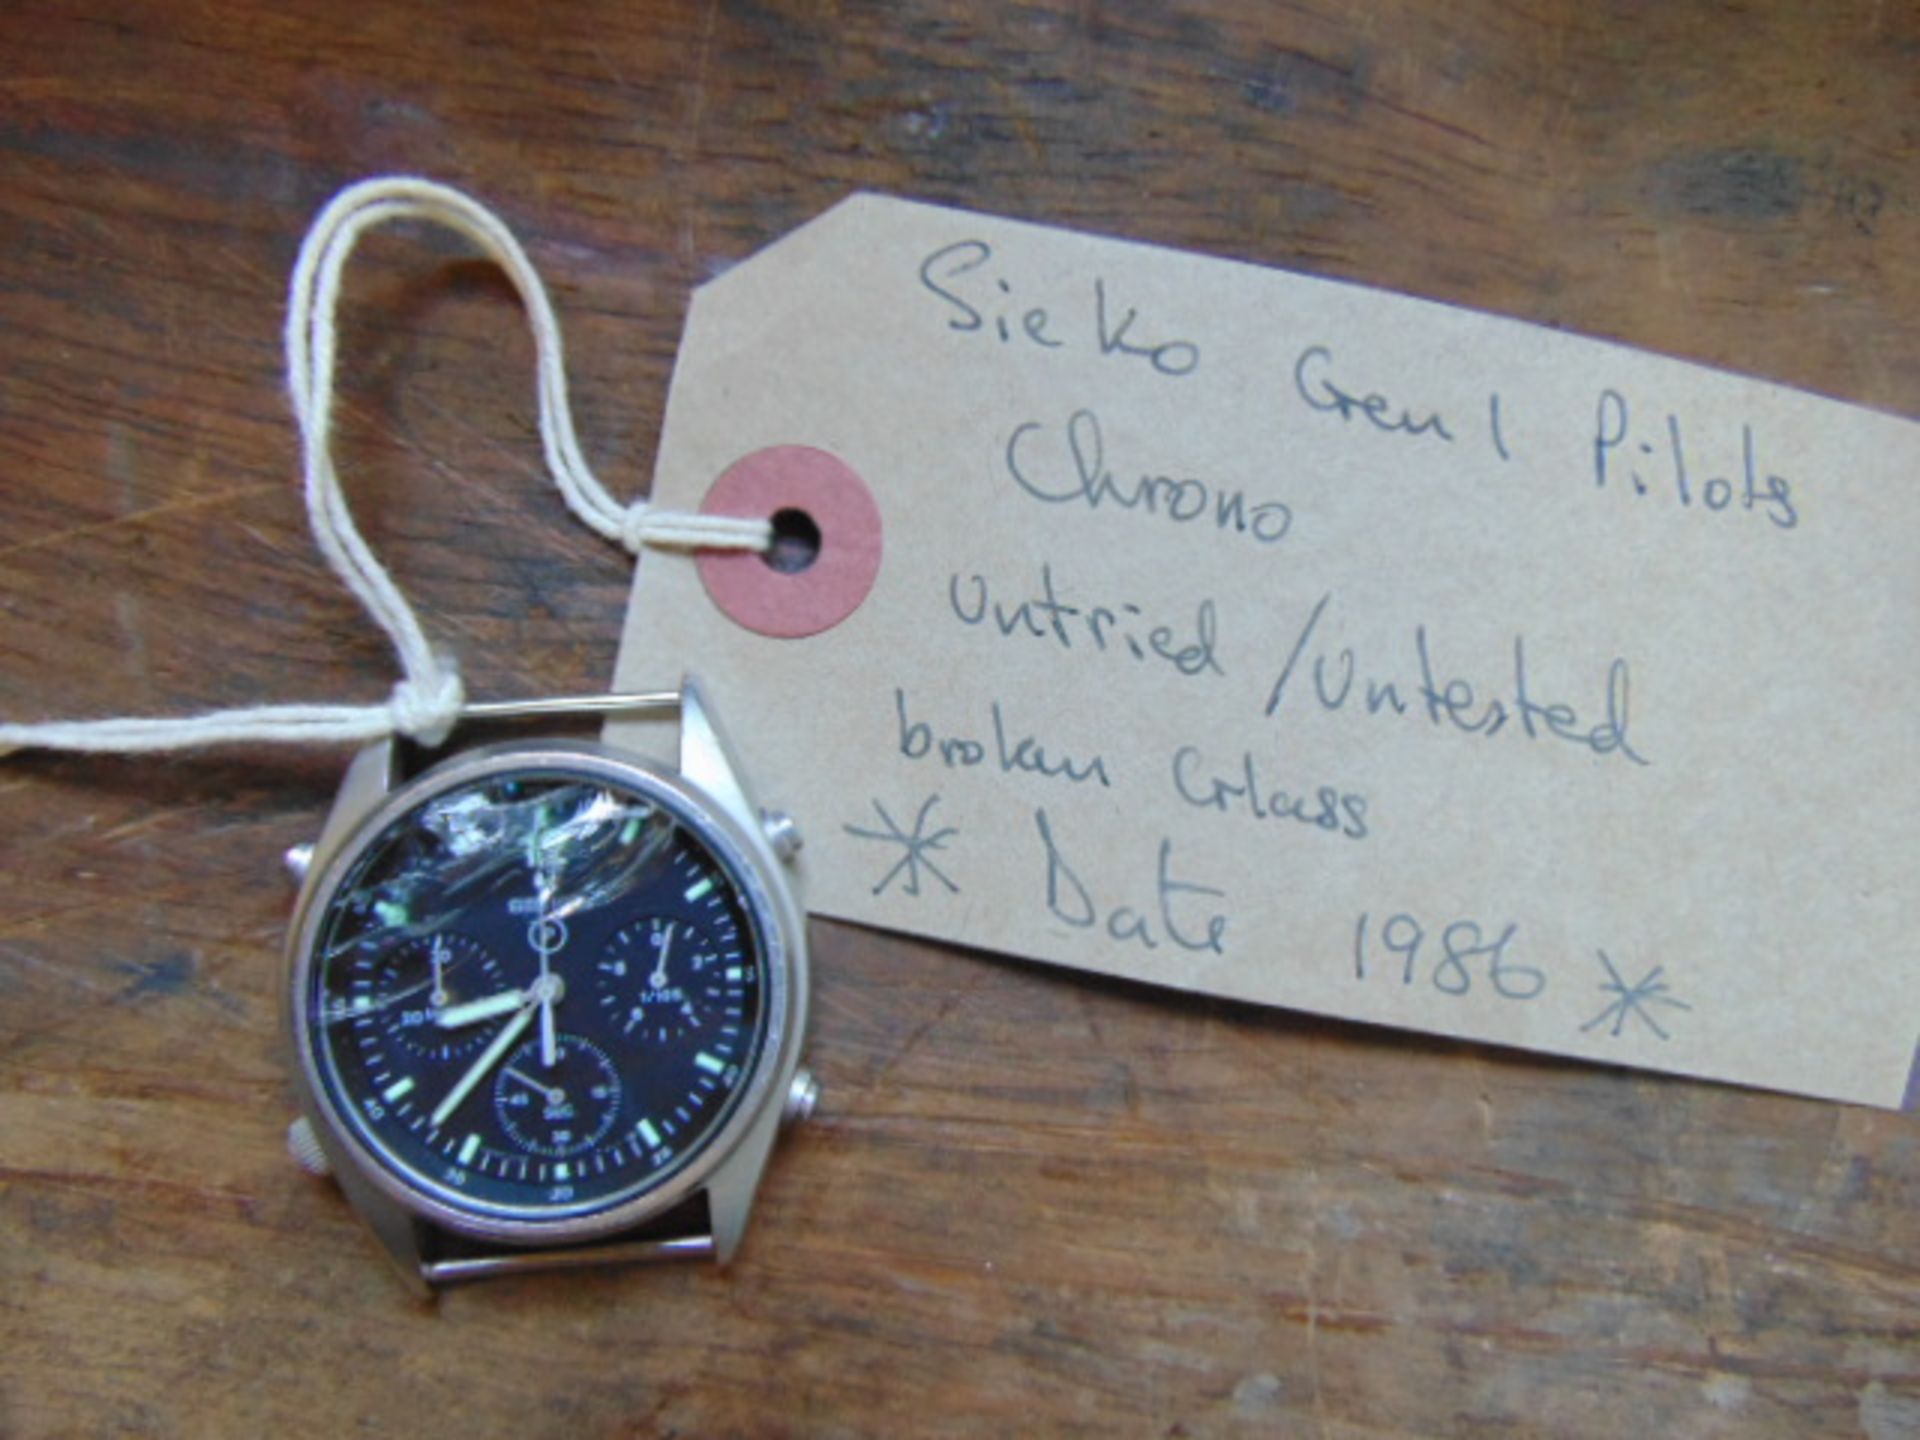 1 x Seiko Pilots Chronograph generation 1 - Image 2 of 4